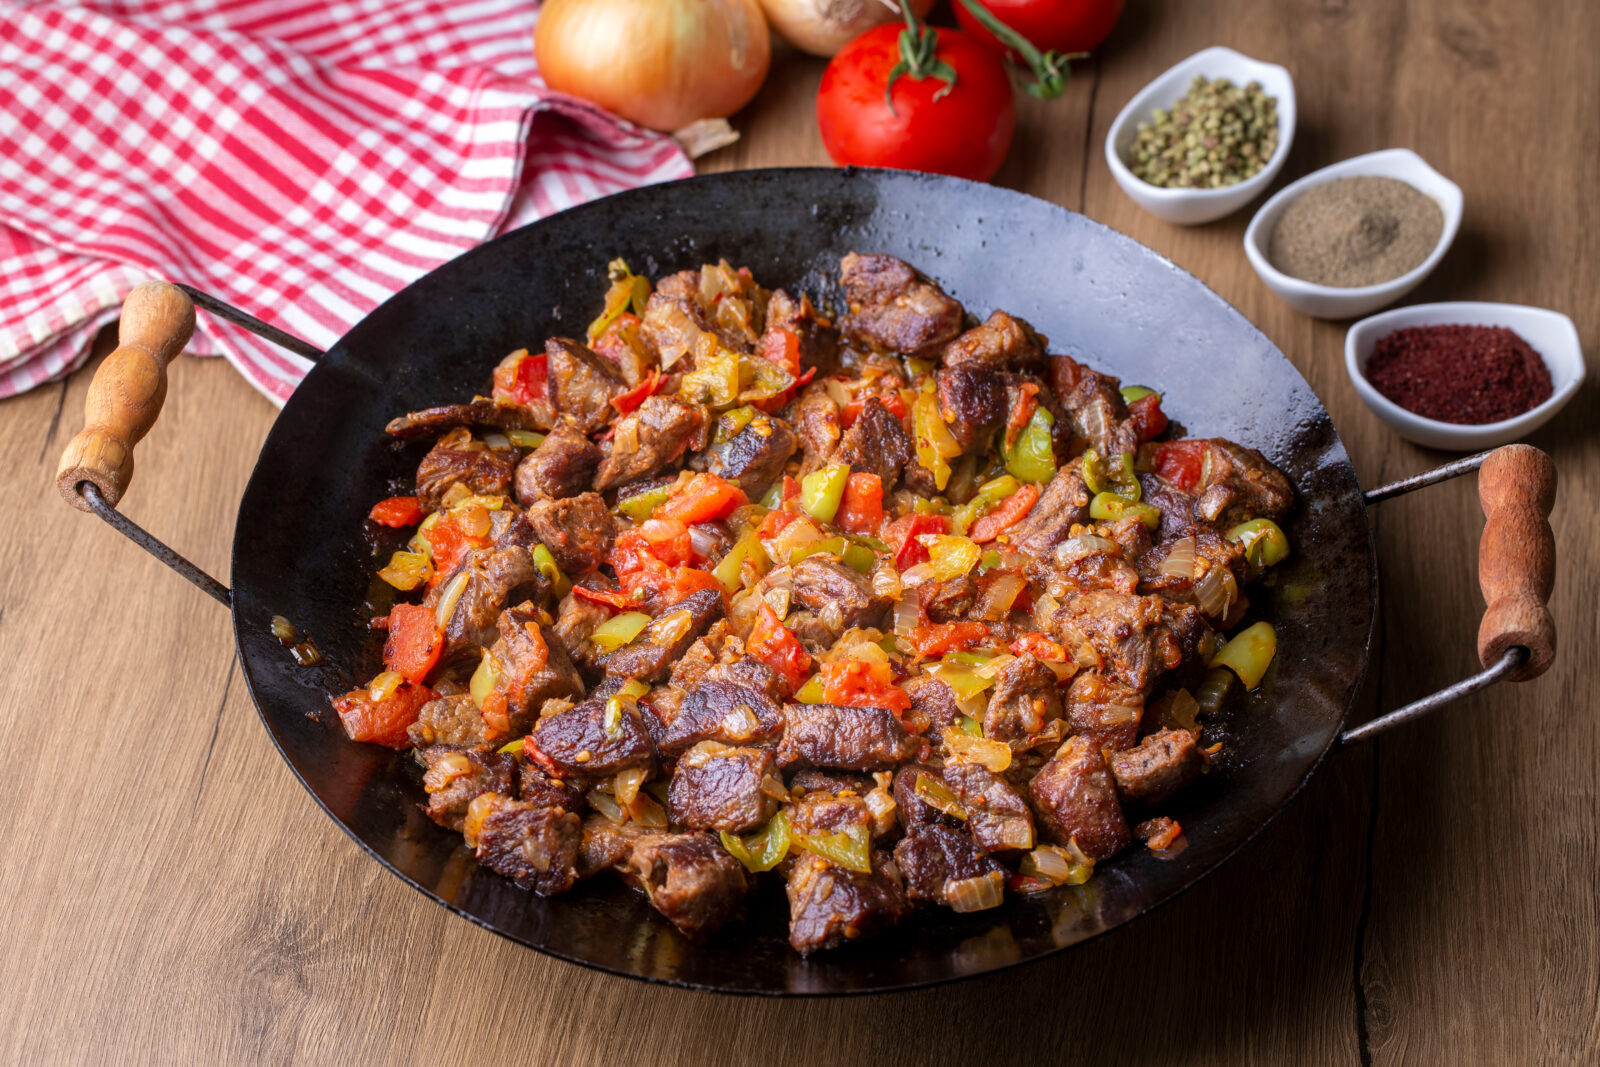 Turkish cuisine specialties for Eid al-Adha